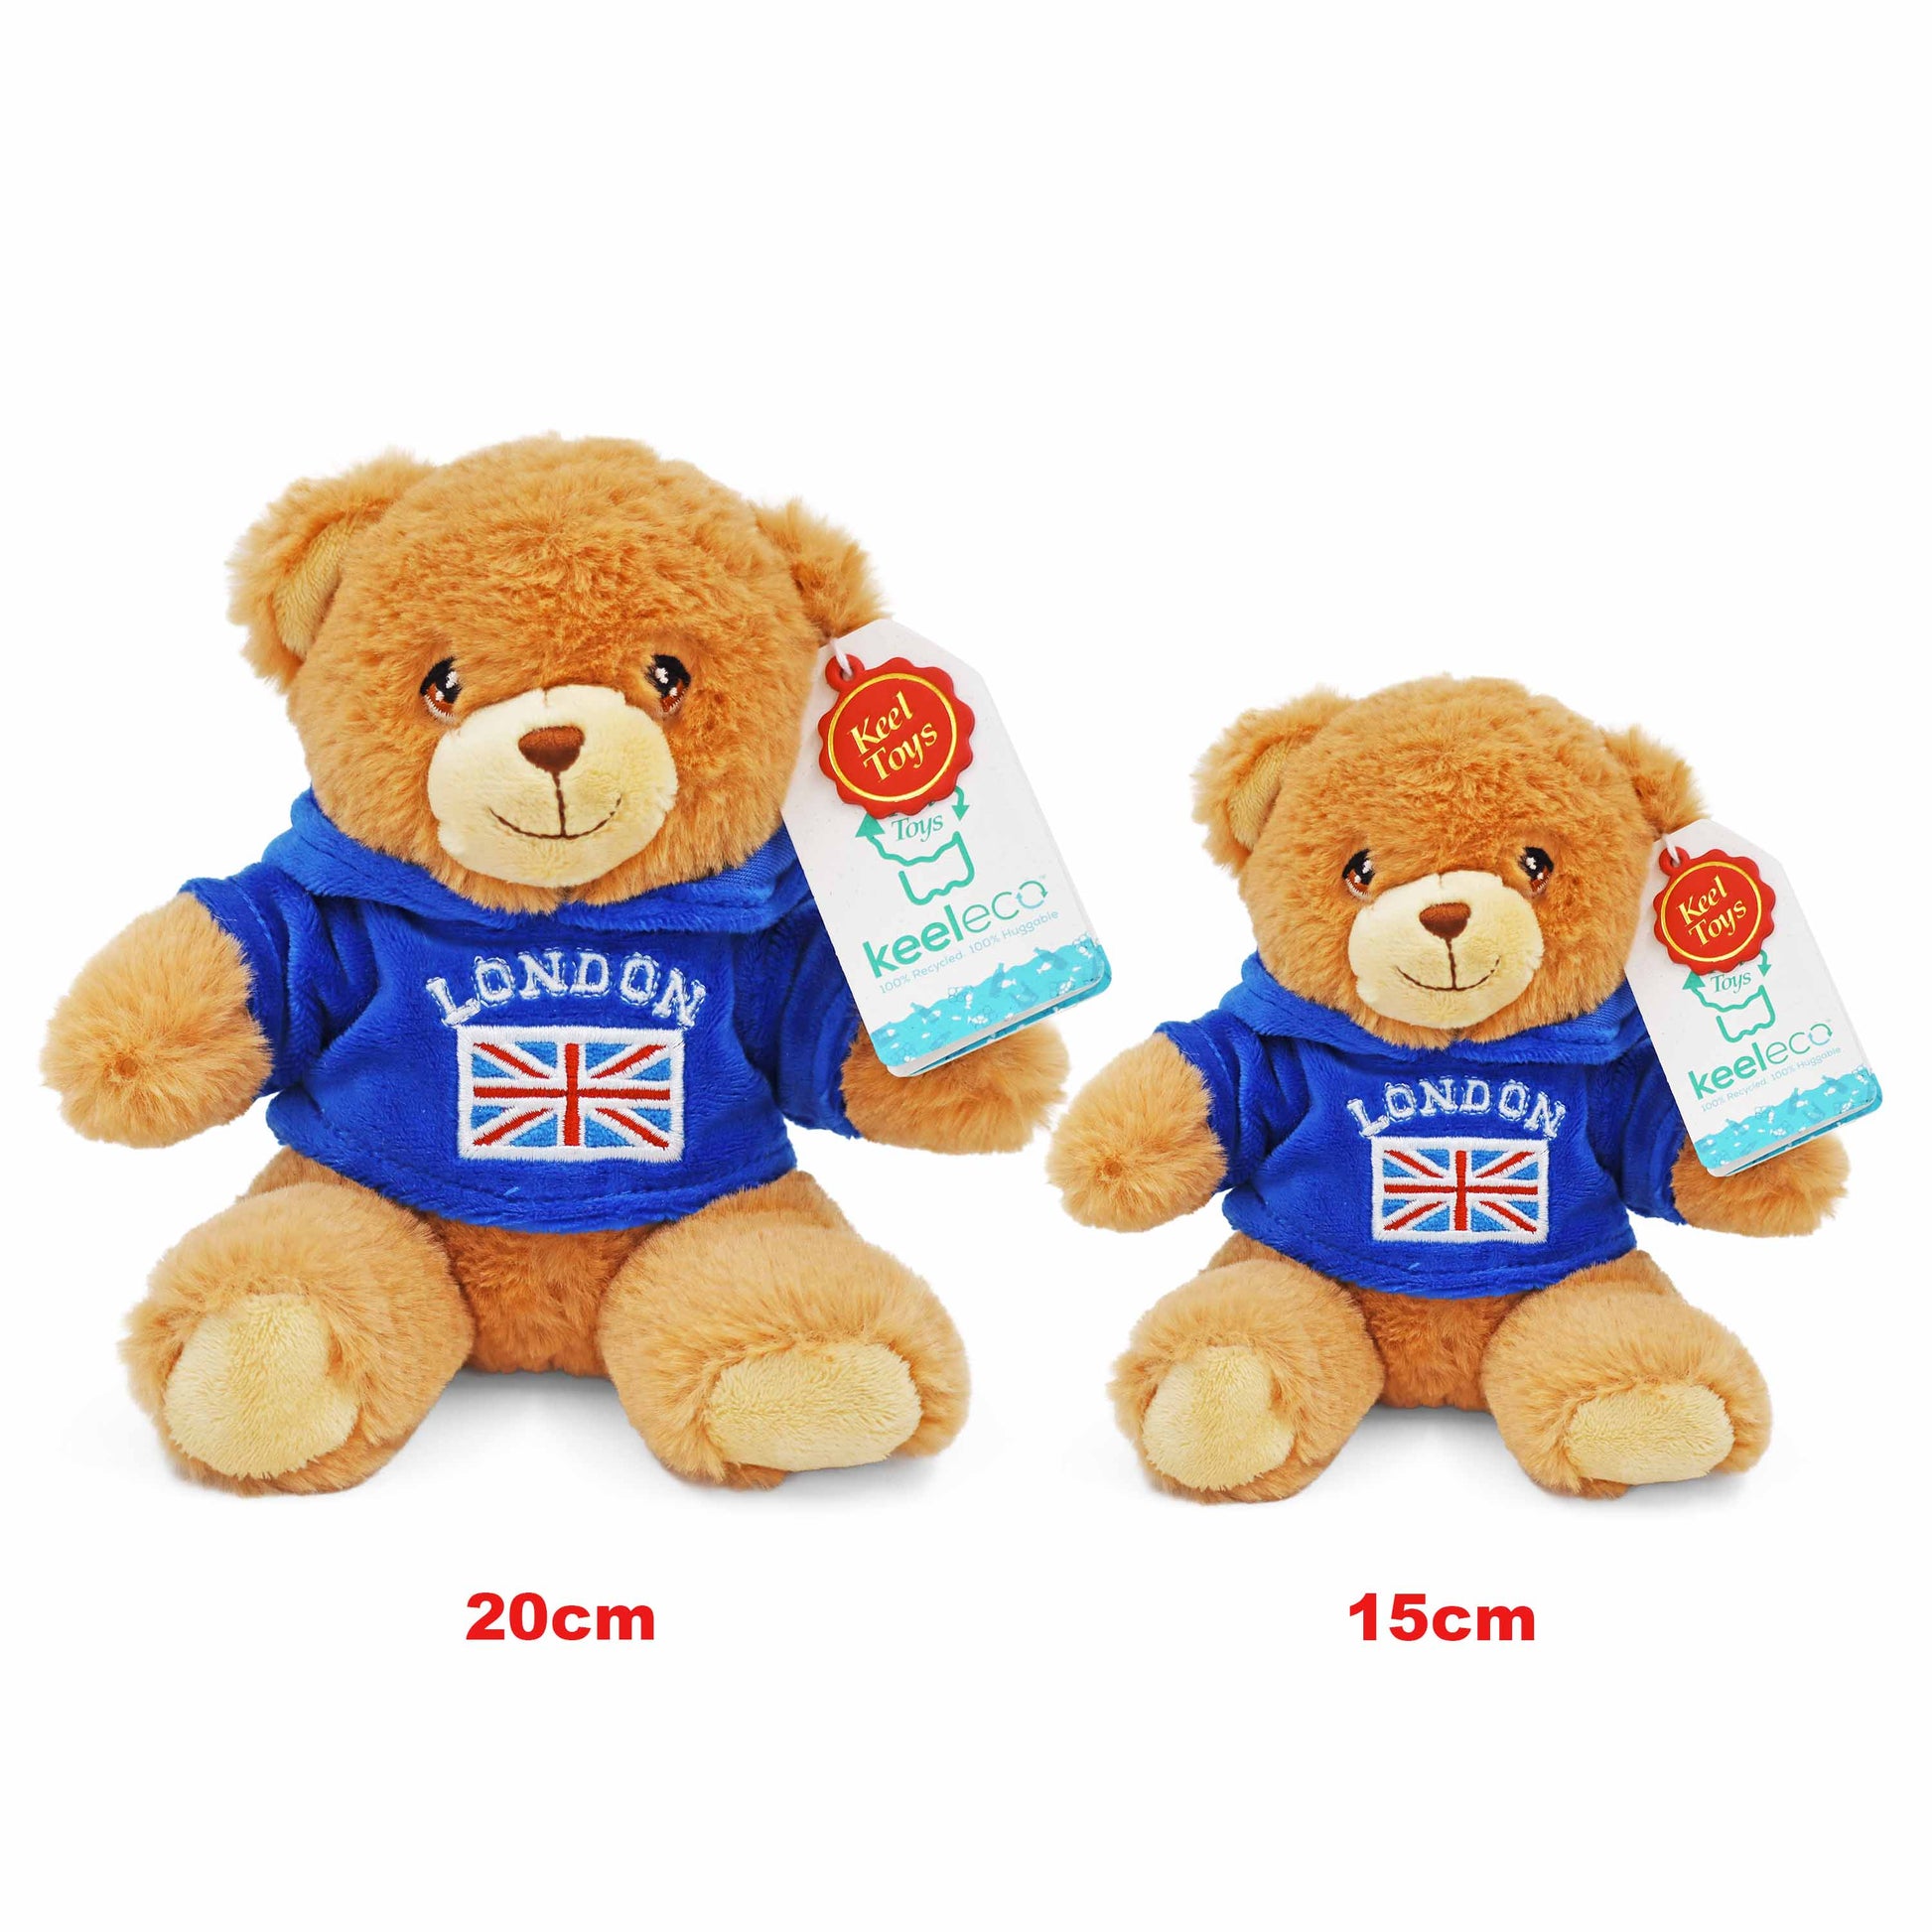 London Union Jack Teddy Bear - Blue Hoodie - London Souvenir Teddy Bear - London Souvenir Teddy Bears